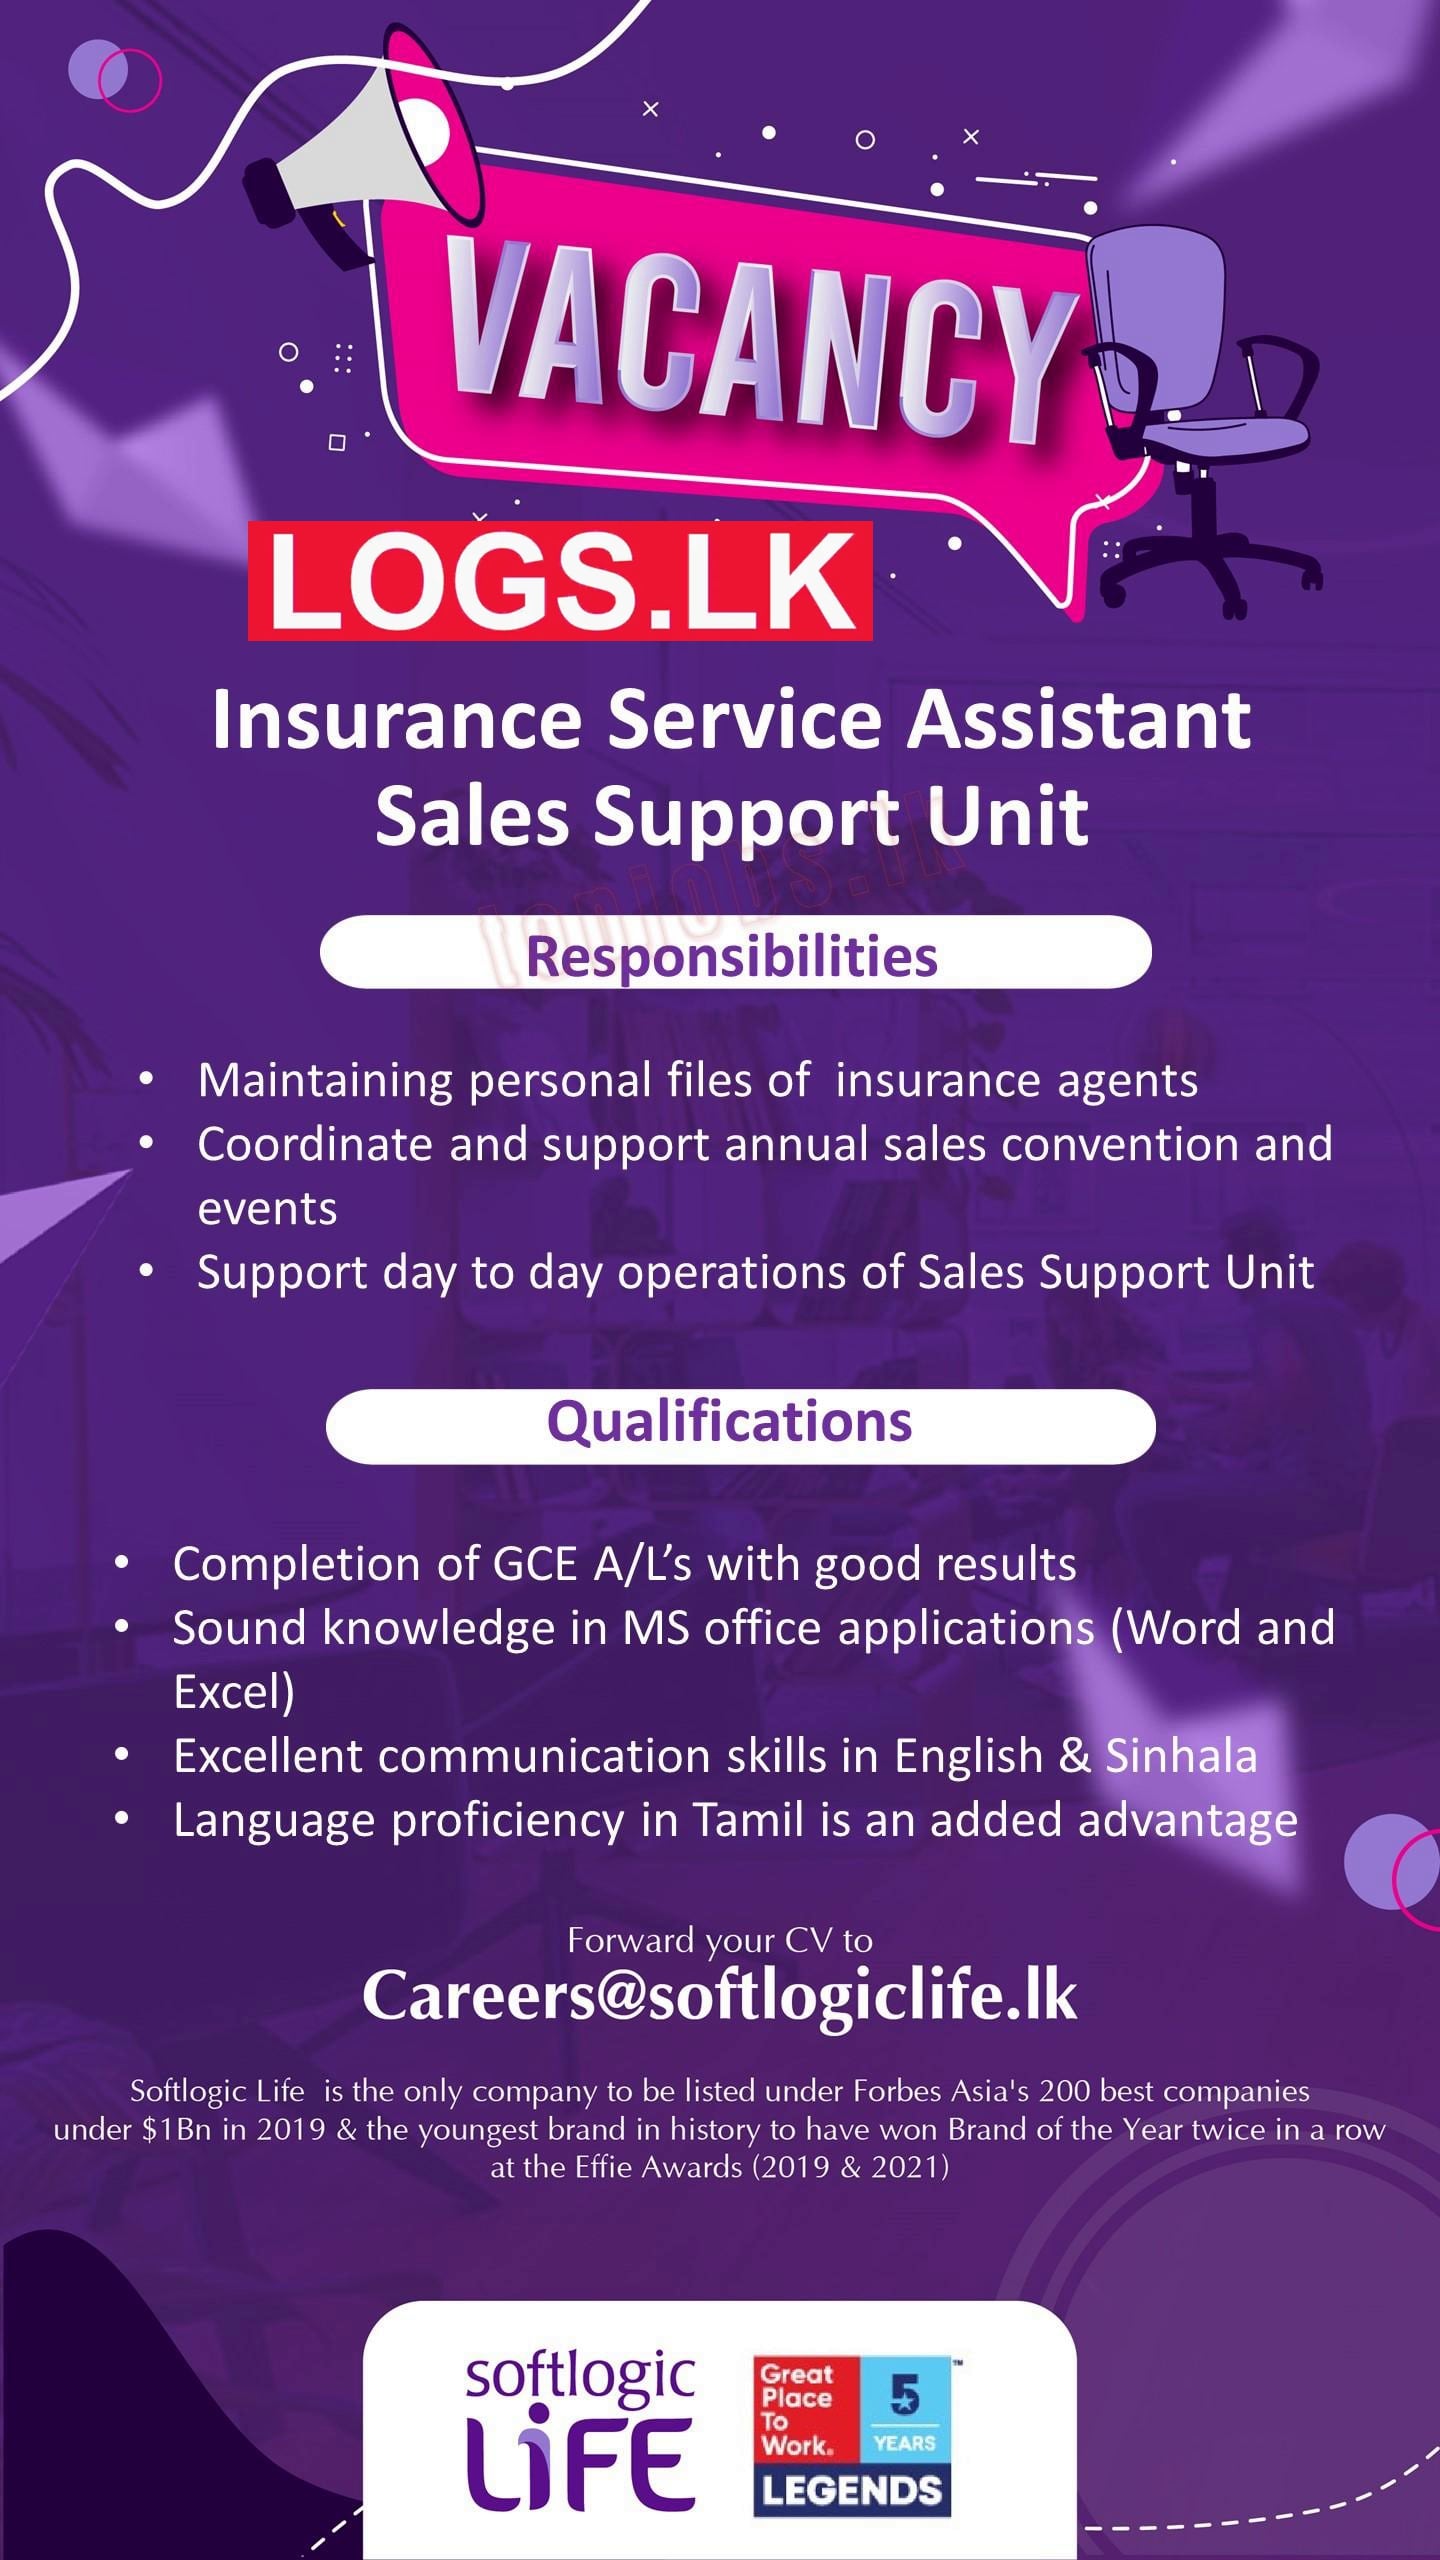 Insurance Service Assistant - SSU - Softlogic Life Insurance Jobs Vacancies